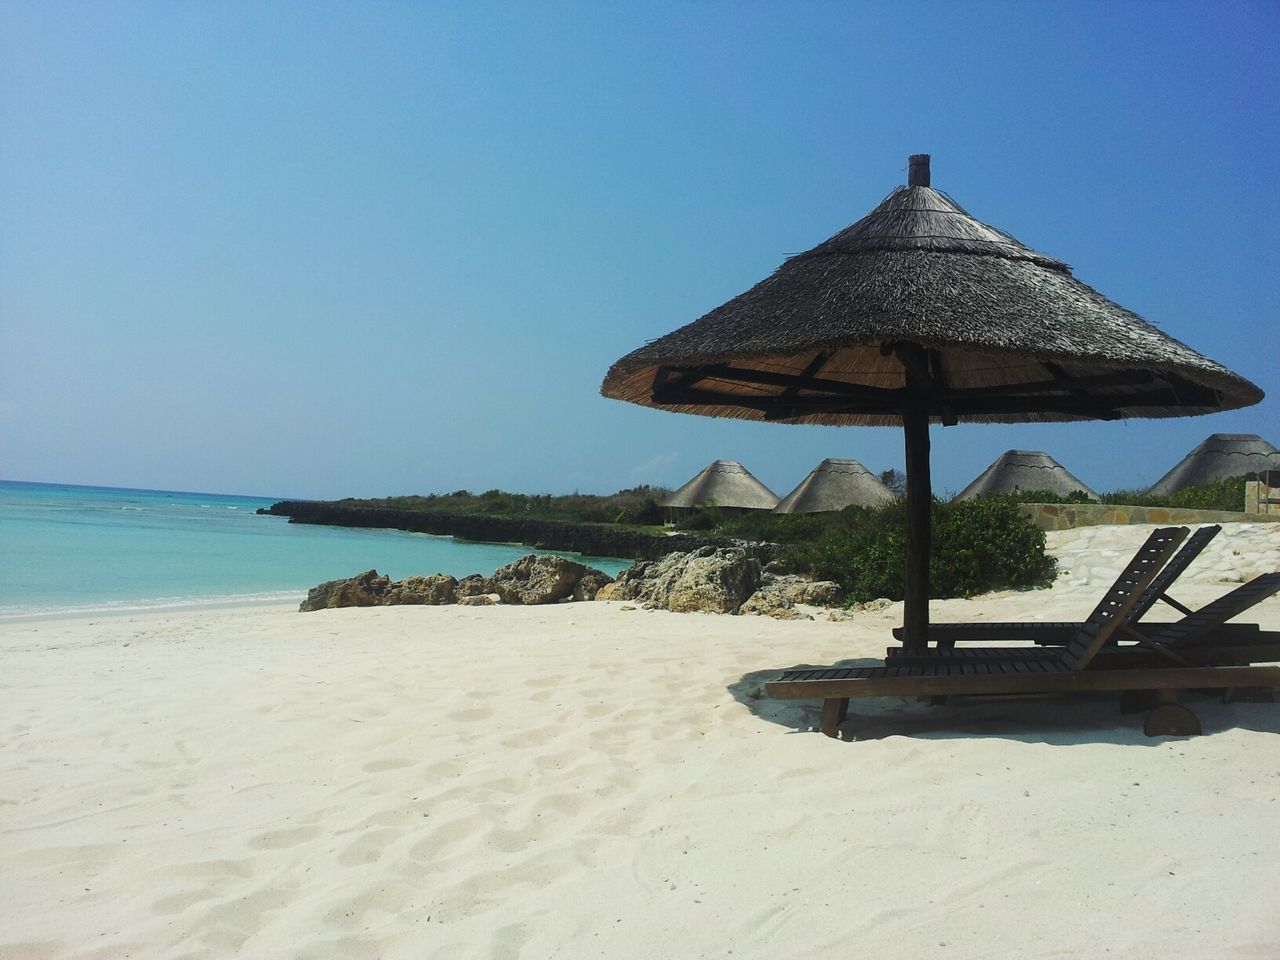 Lounge chair and sunshade on beach against clear sky